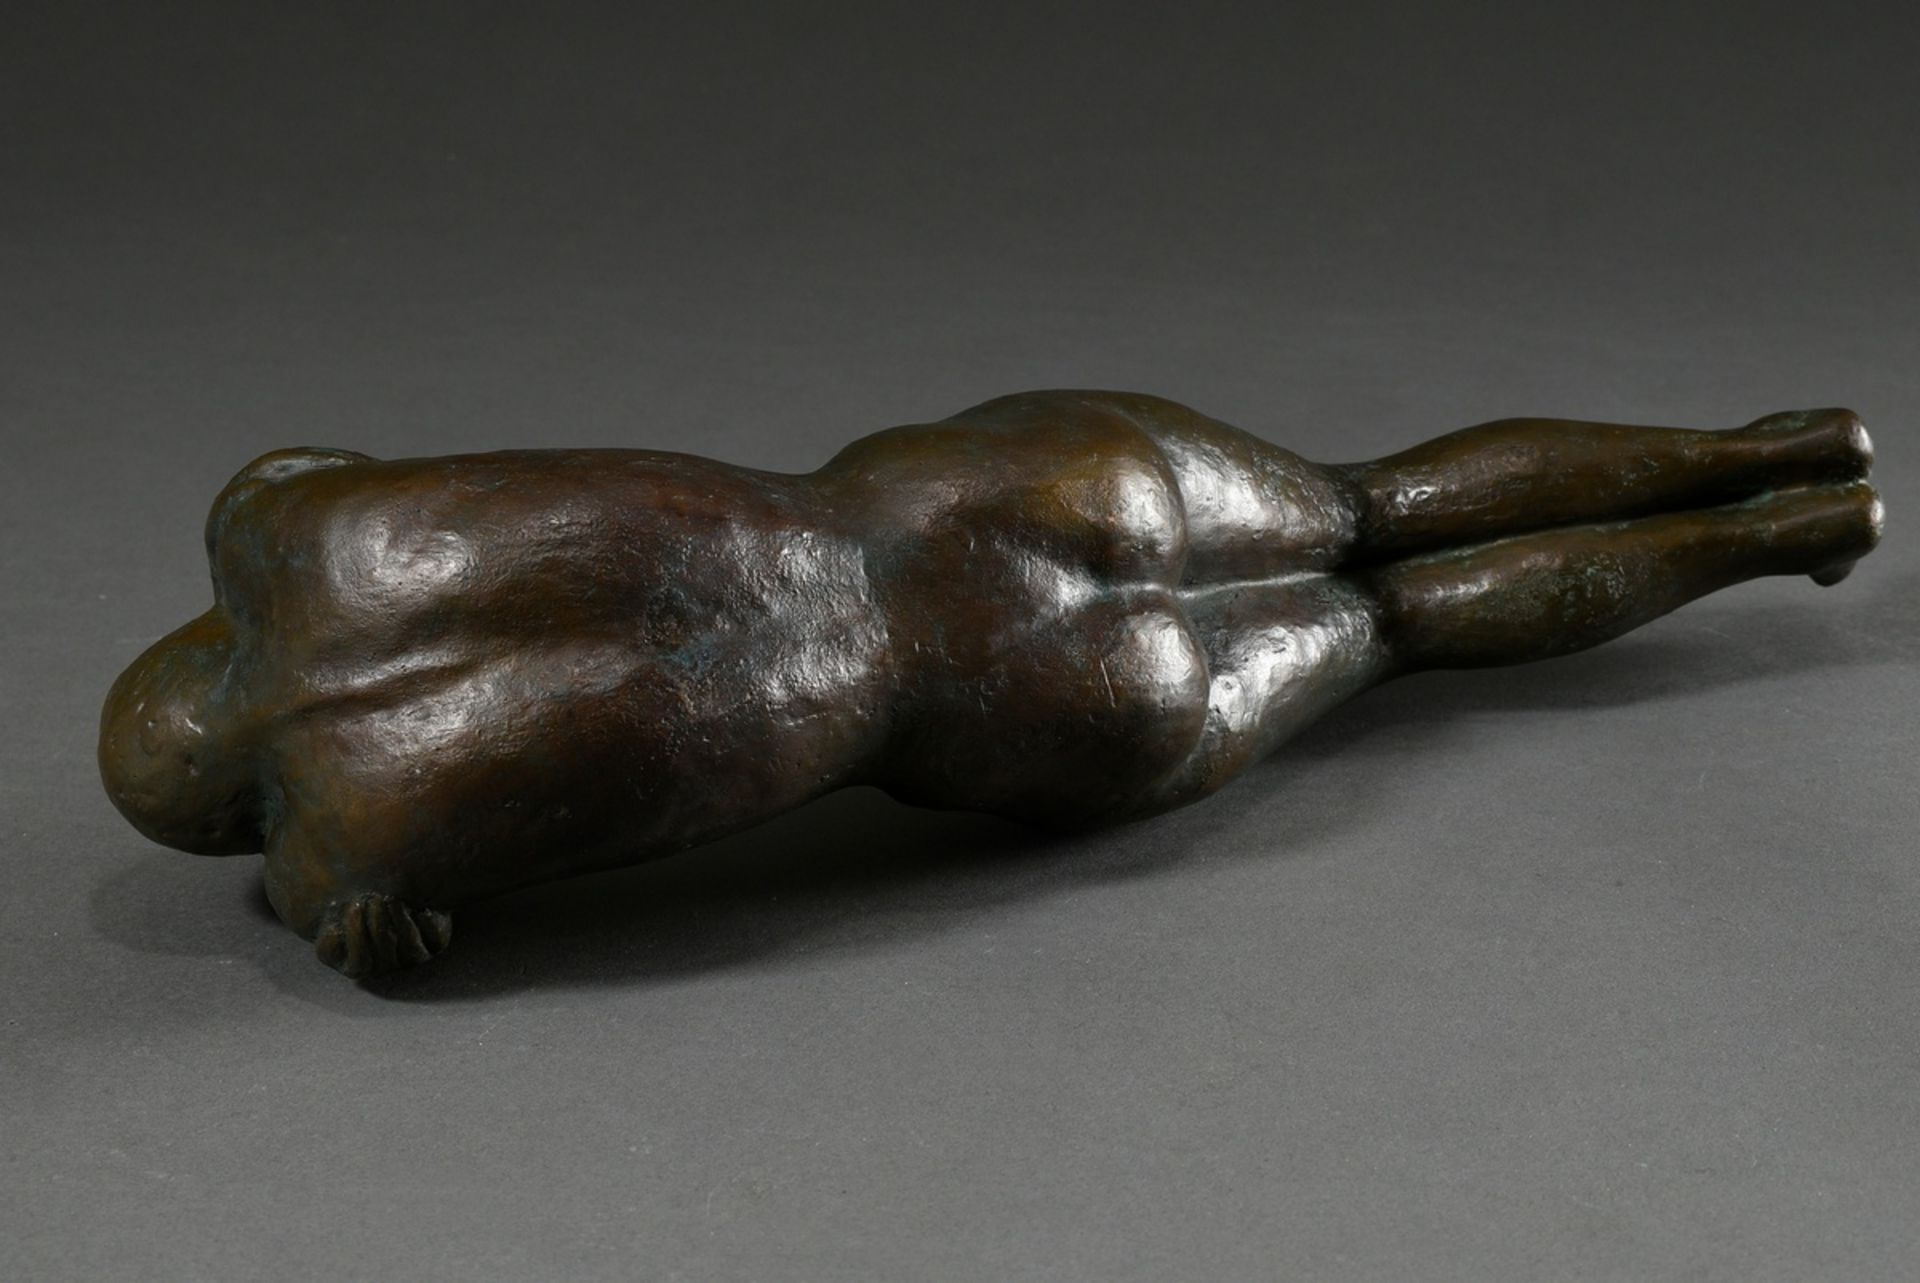 Woebcke, Albert Friedrich Christian (1896-1980) "Reclining female nude", bronze, hollow casting, in - Image 5 of 6